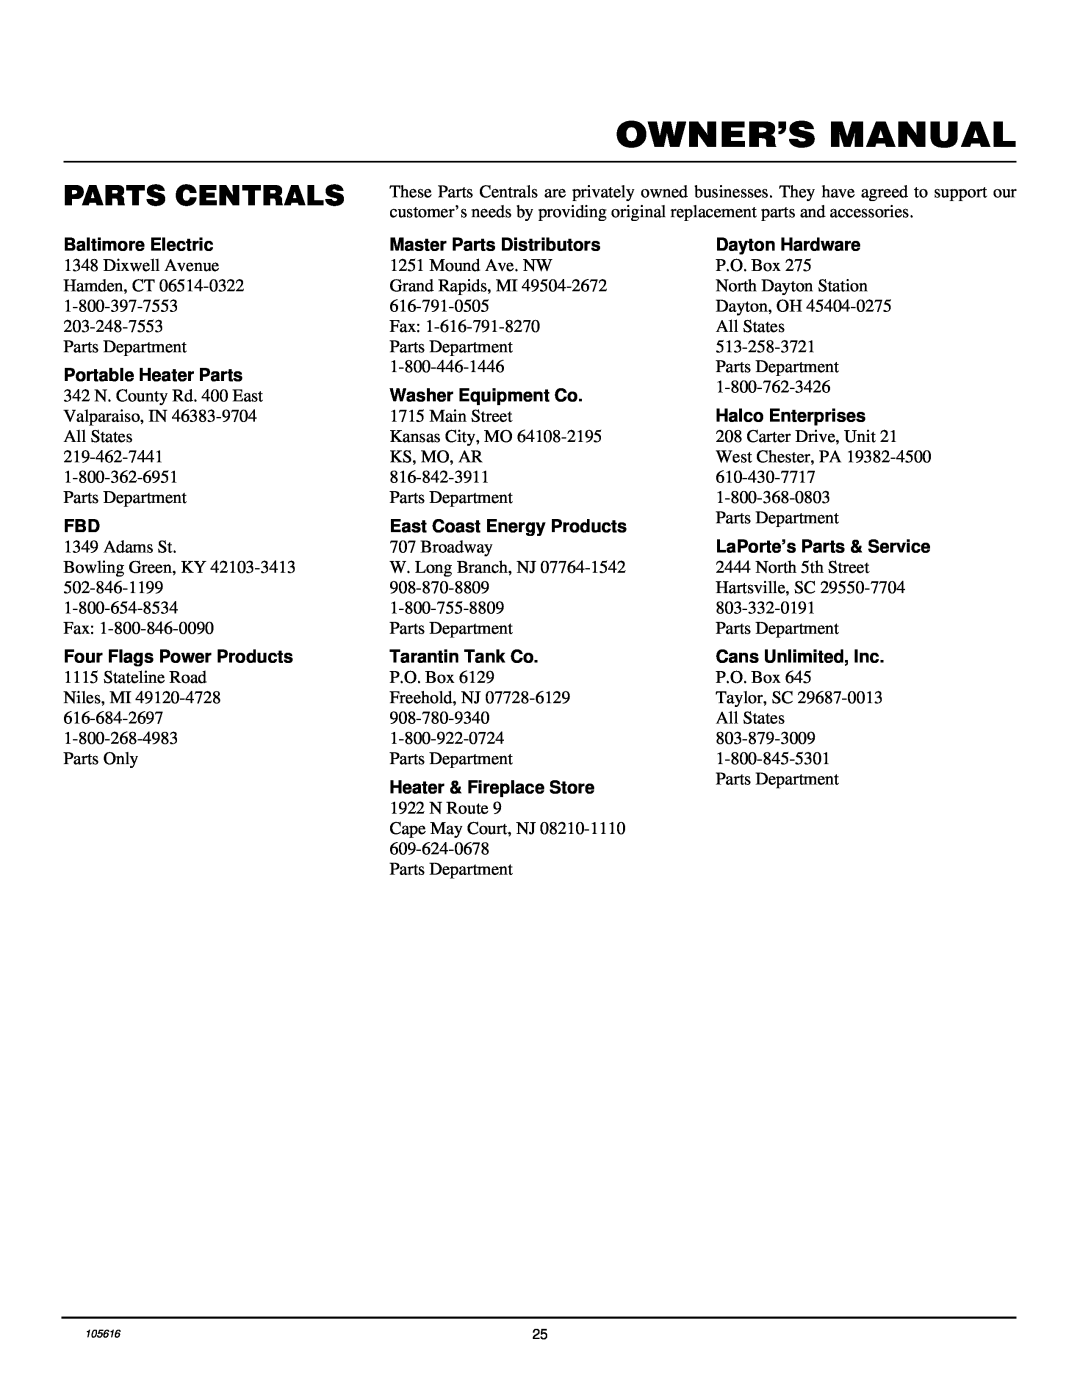 Desa CGCF26PRA Parts Centrals, Baltimore Electric, Master Parts Distributors, Dayton Hardware, Portable Heater Parts 